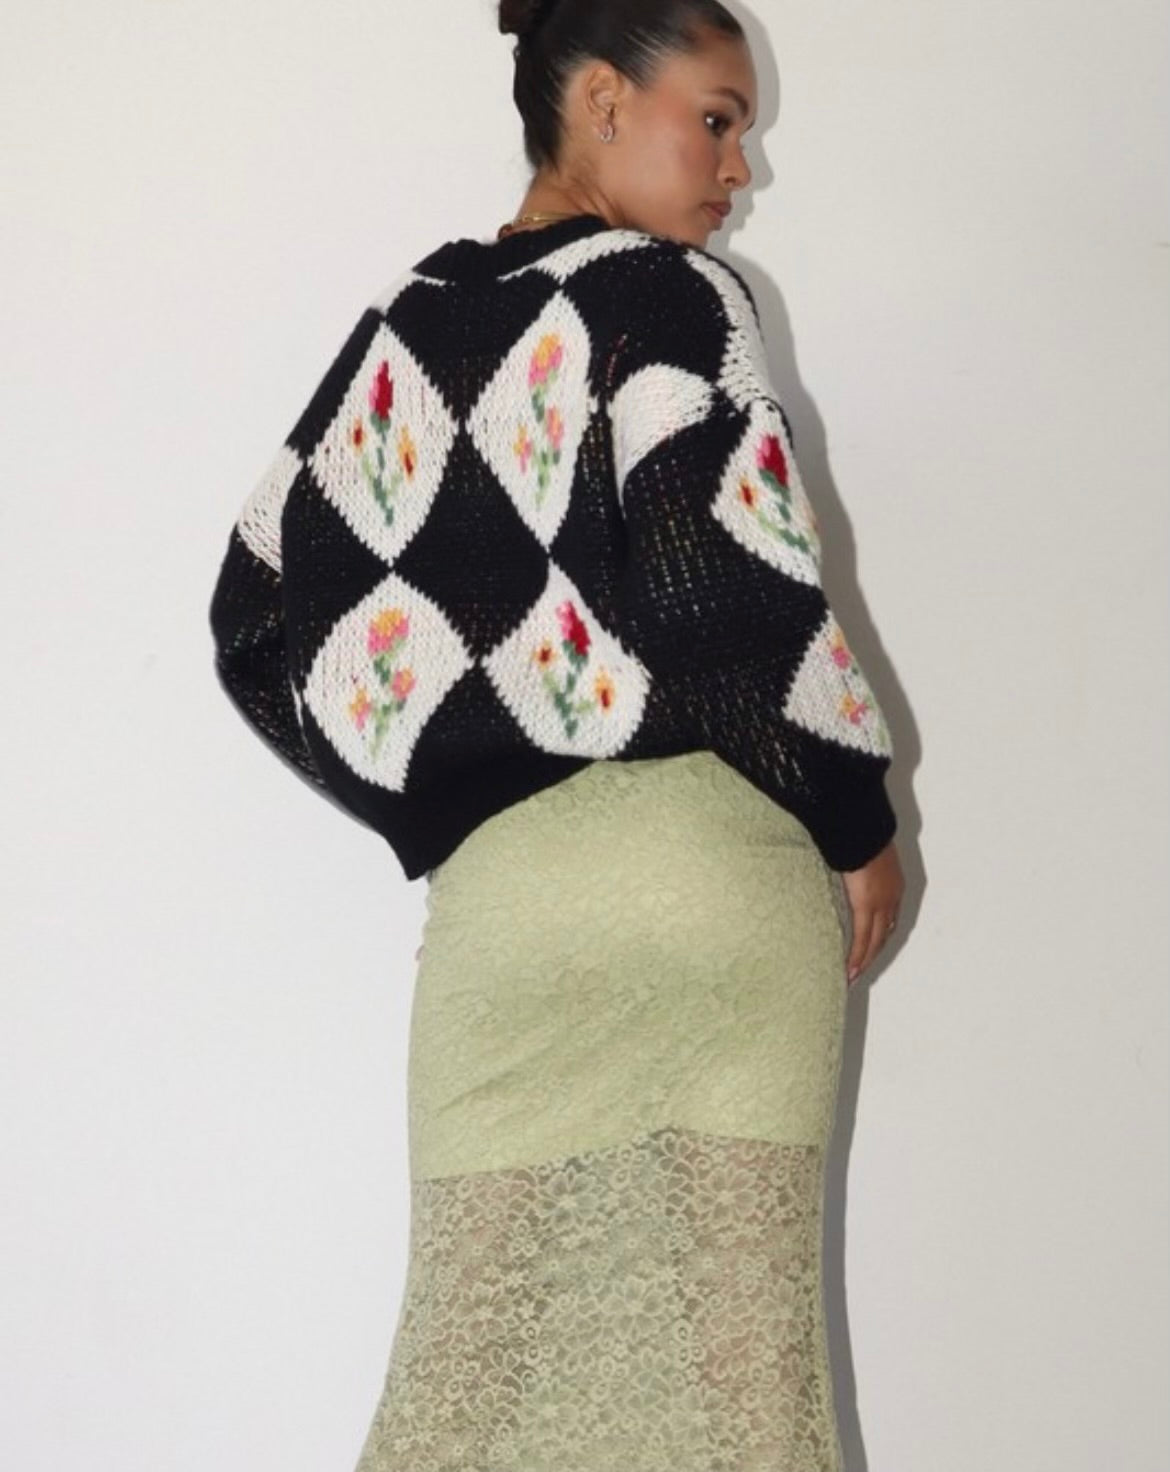 Vintage flower pattern sweater